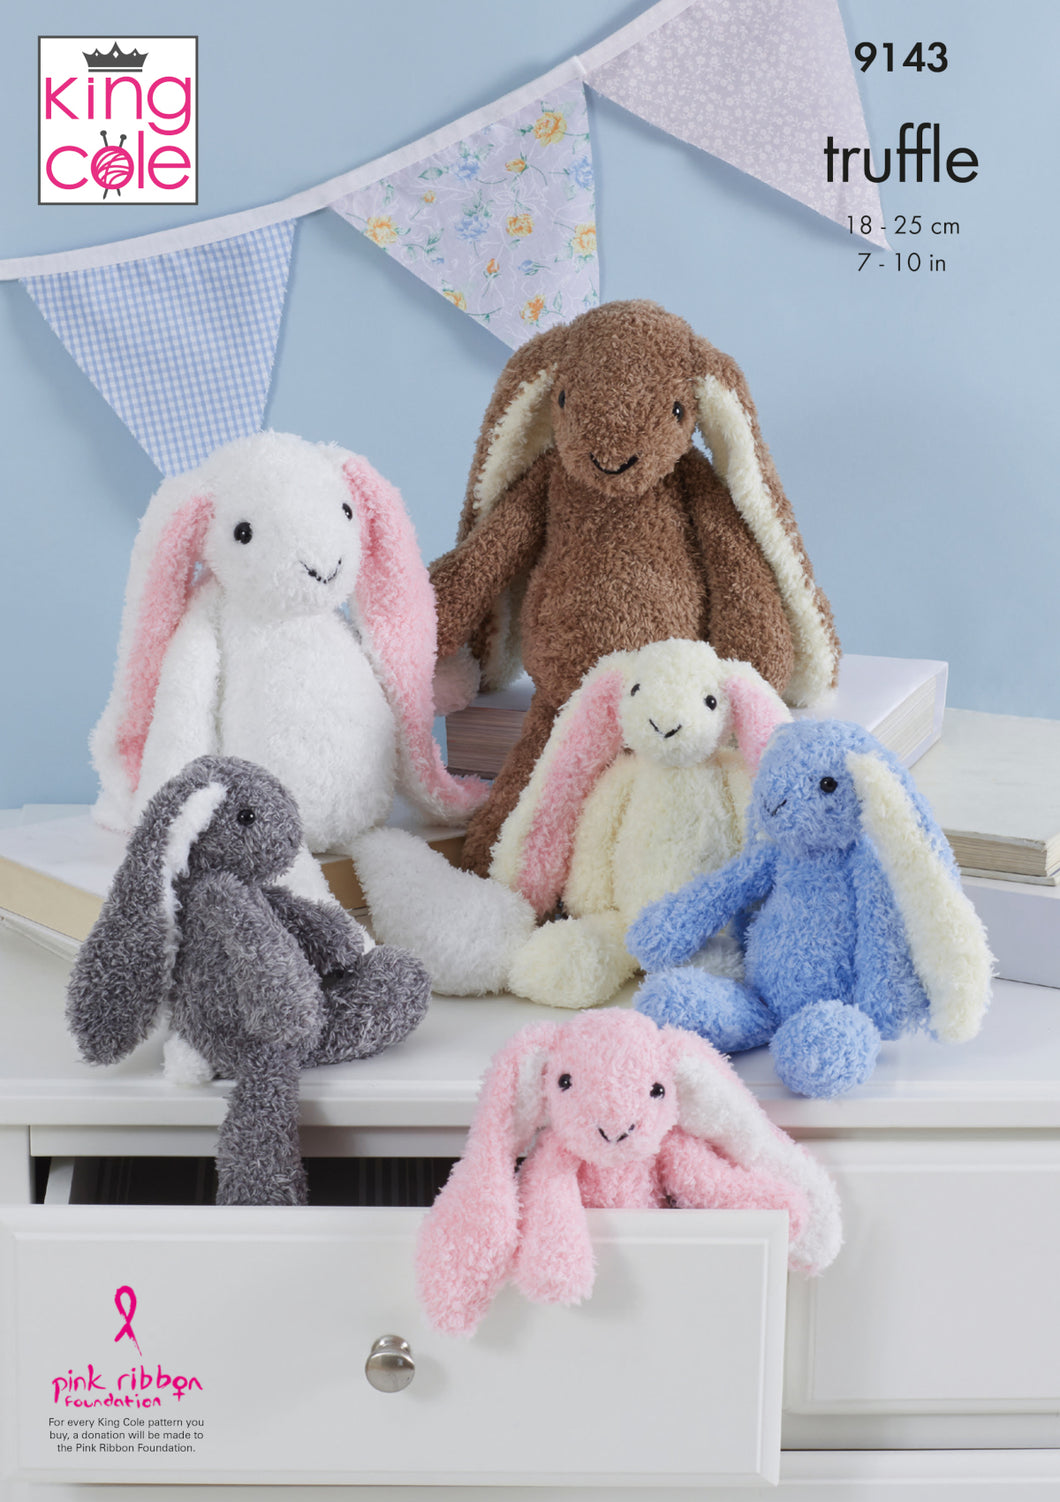 King Cole Truffle Knitting Pattern - Bunny Rabbit Toys (9143)